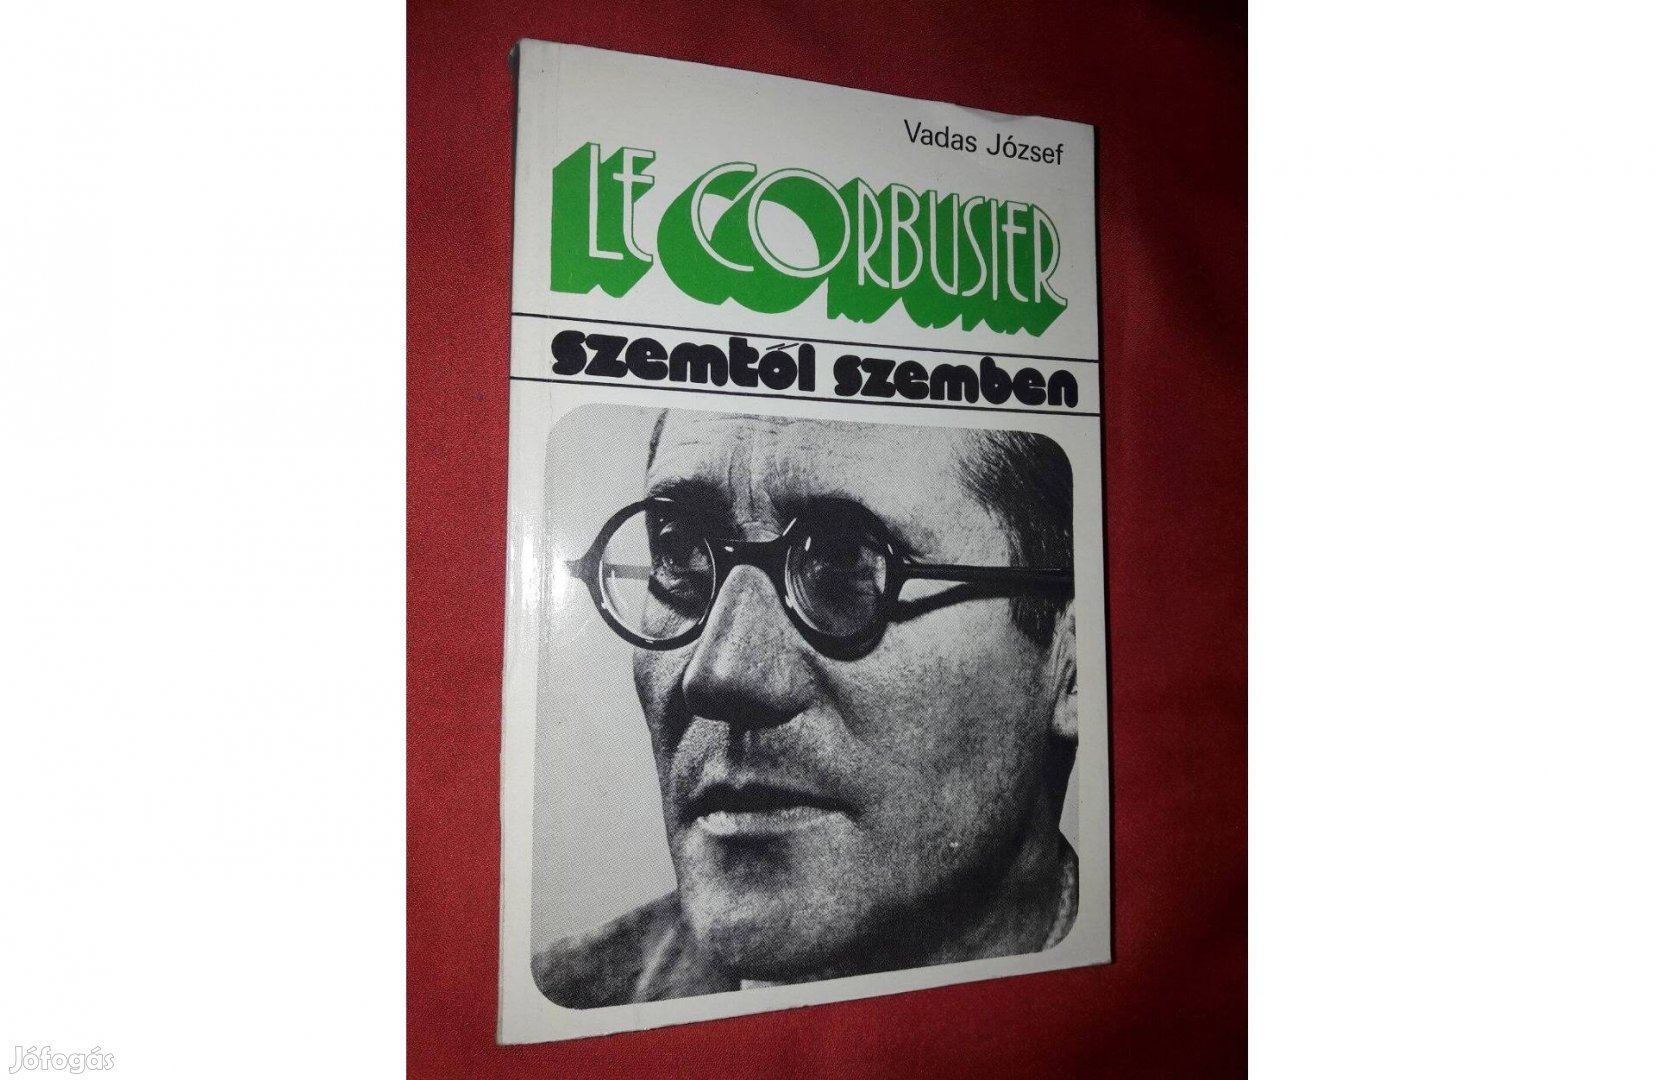 Le Corbusier, írta: Vadas József, olvasatlan